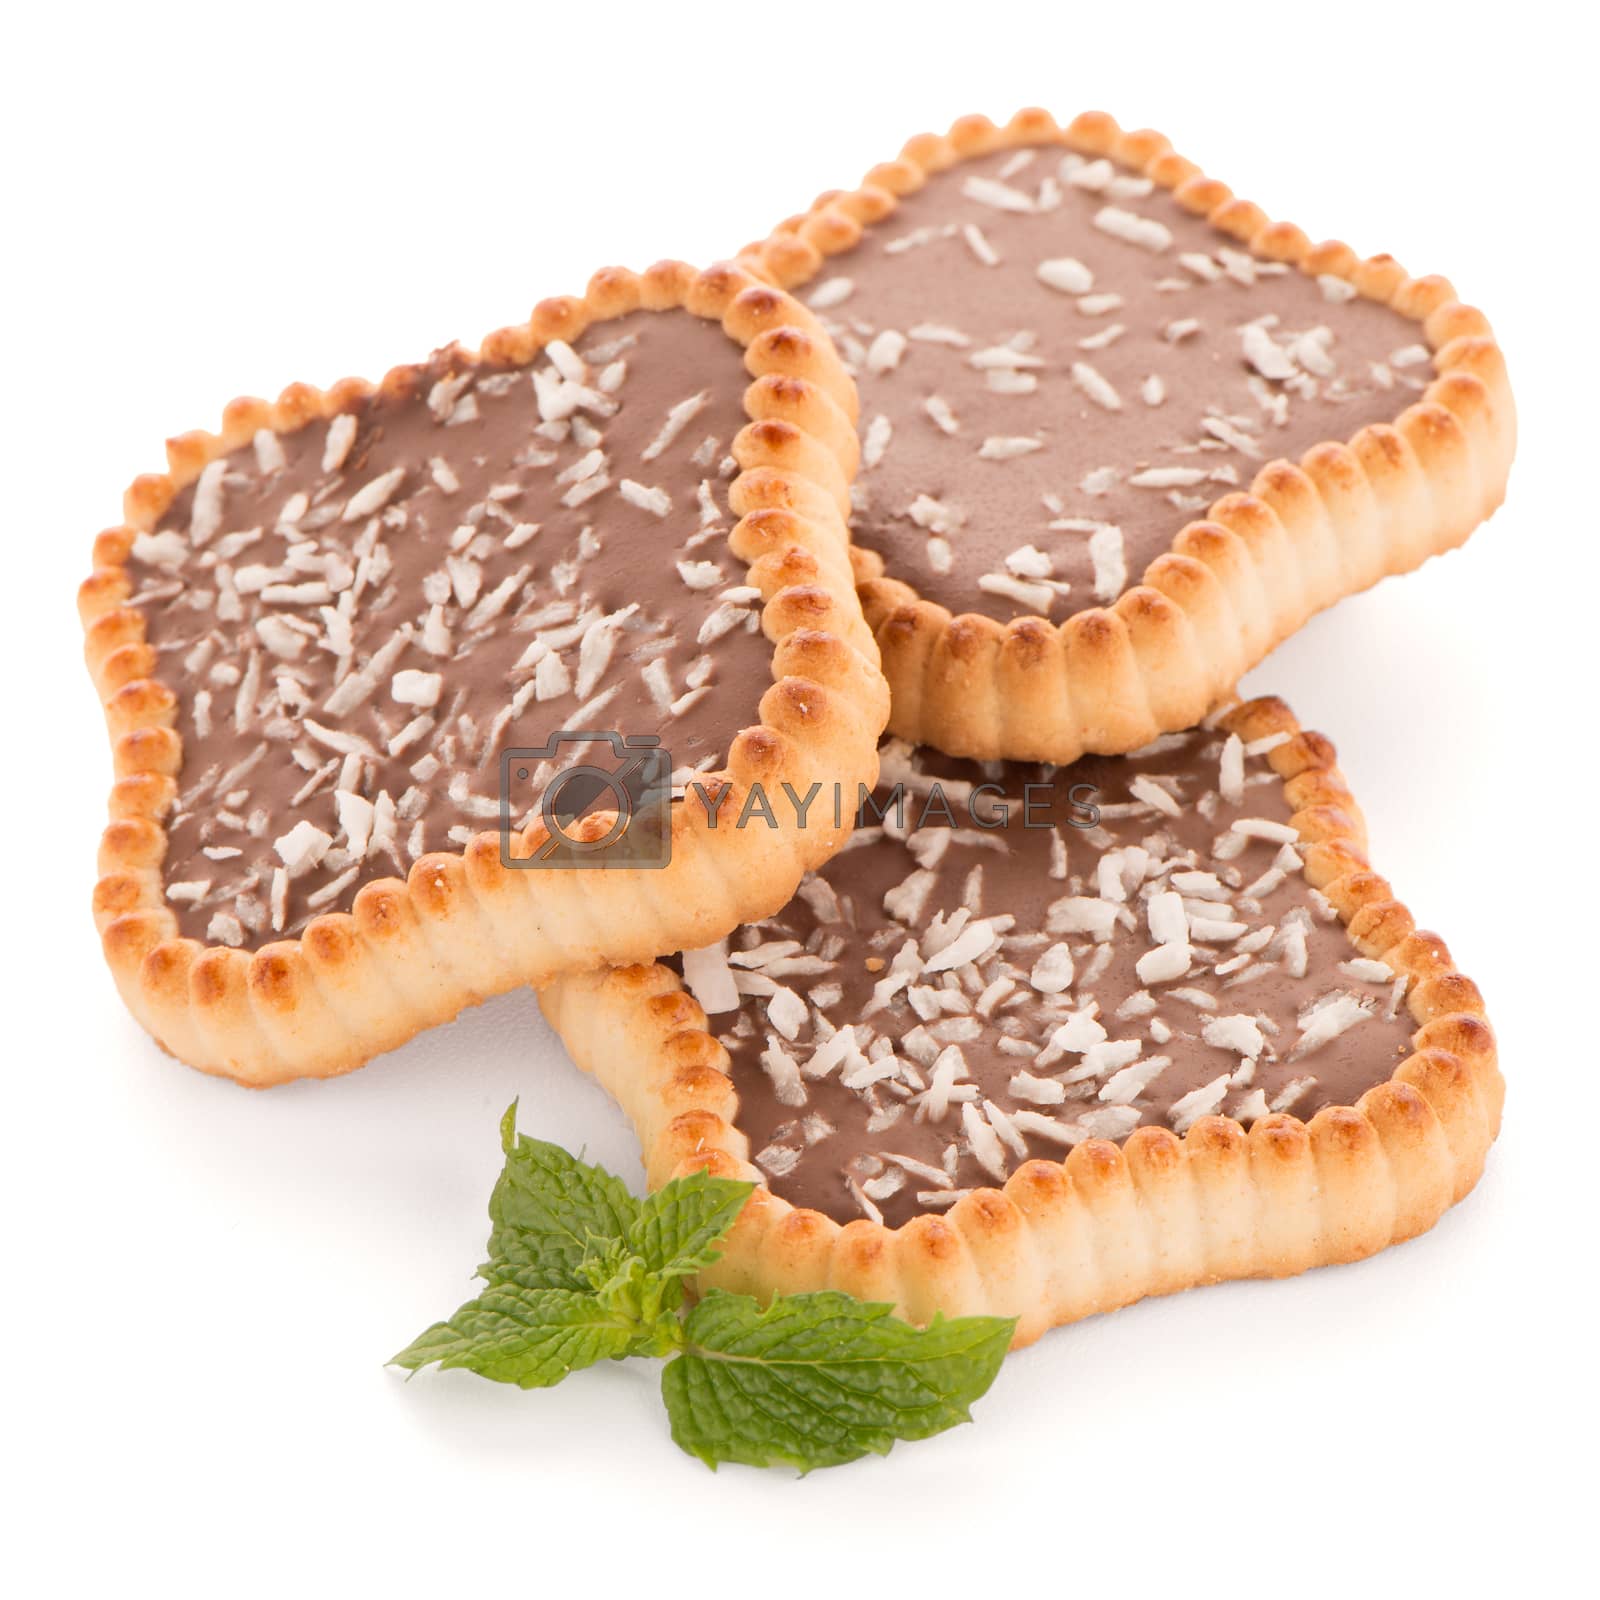 Royalty free image of Chocolate tart cookies by homydesign